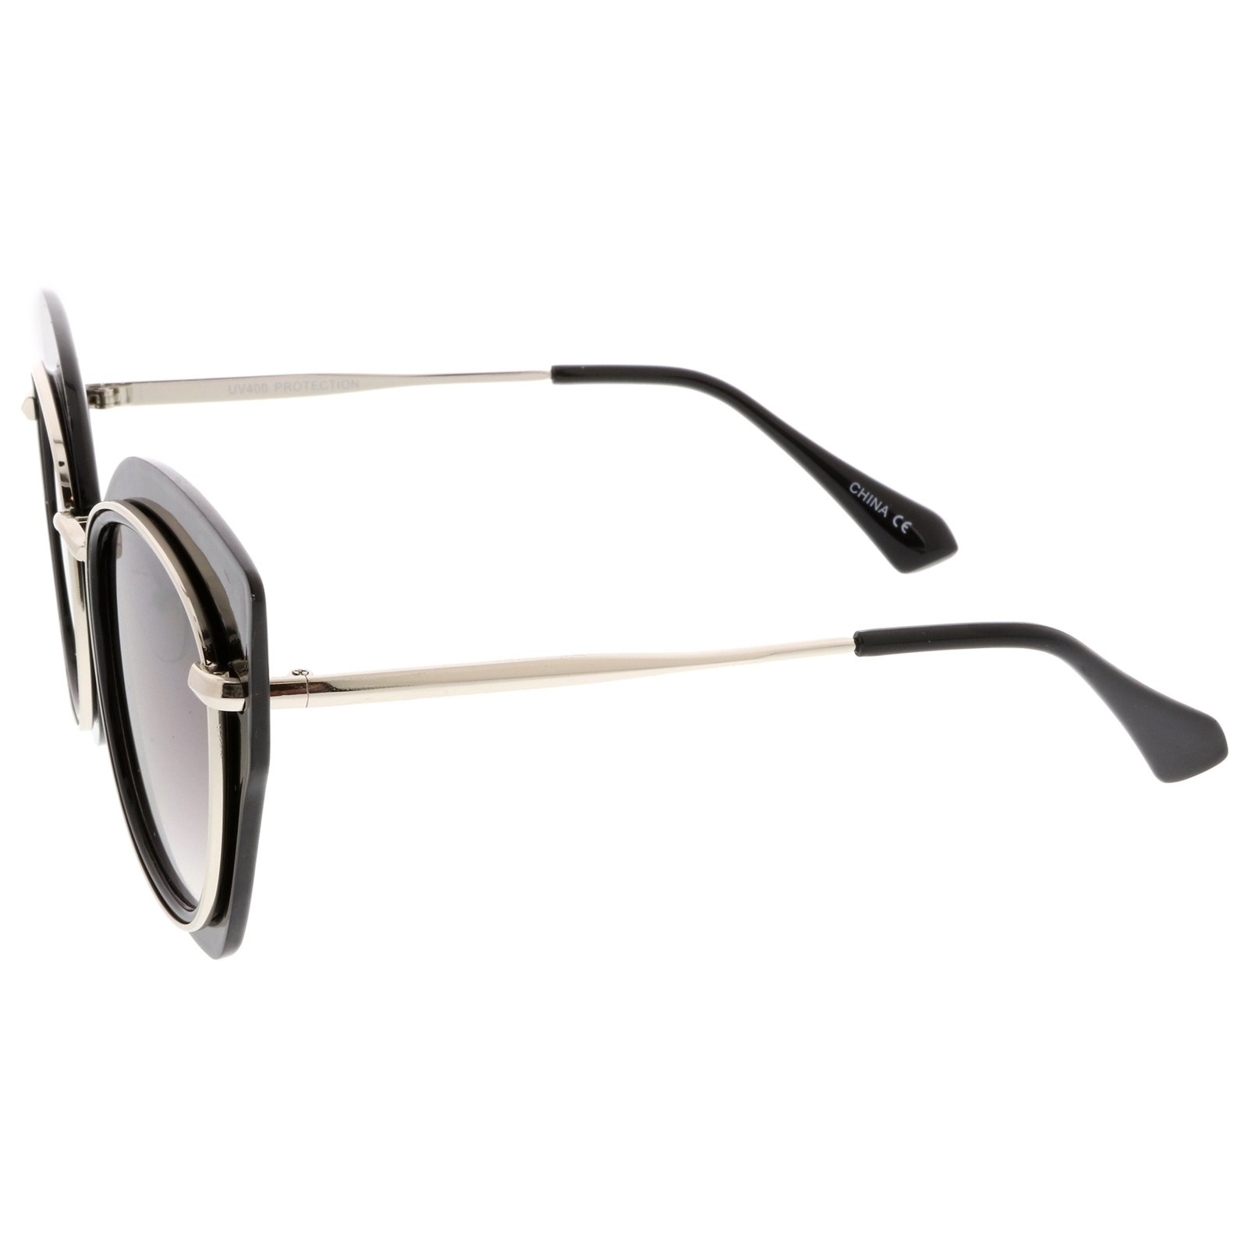 Women's Oversize Metal Trim Slim Arms Super Flat Lens Cat Eye Sunglasses 57mm - Black-Gold / Lavender